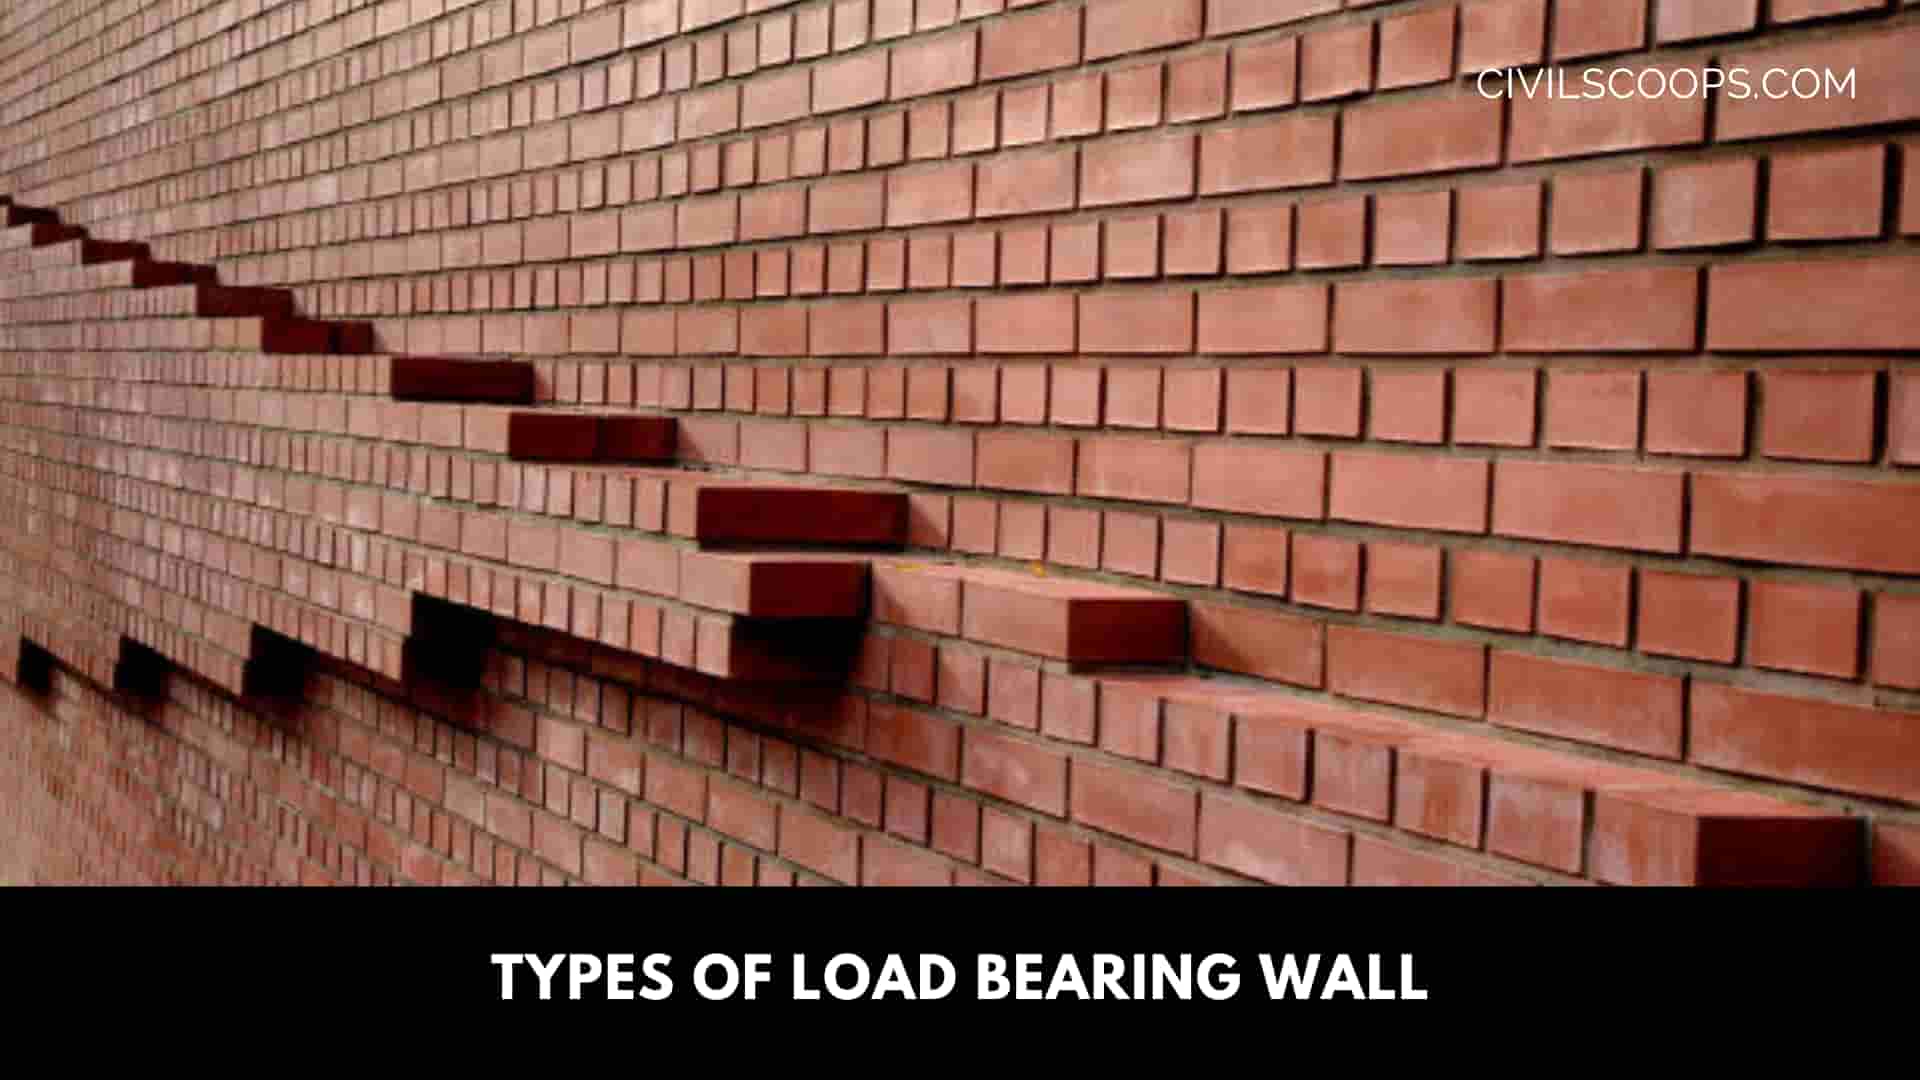 Types of Load Bearing Wall